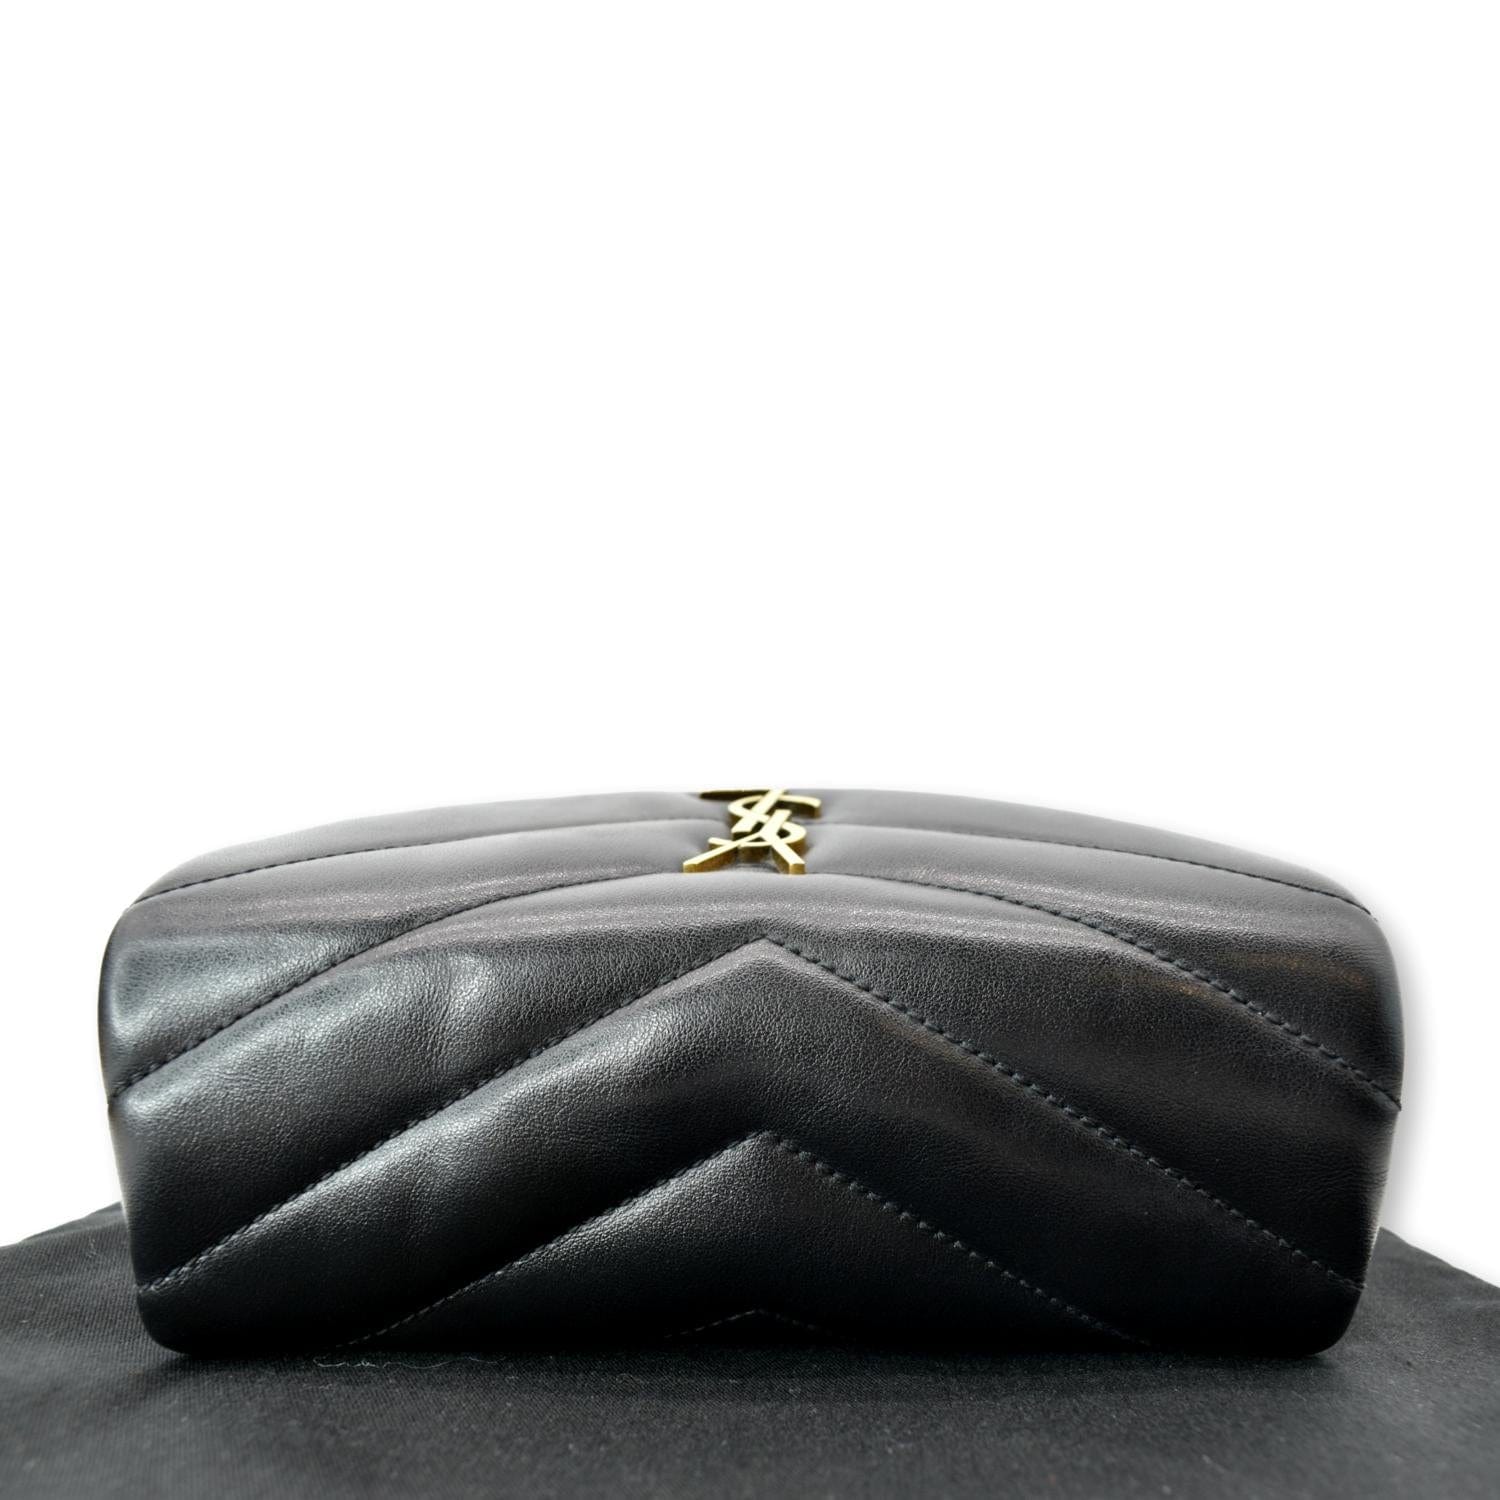 Saint Laurent Small YSL Monogram Leather Satchel Bag